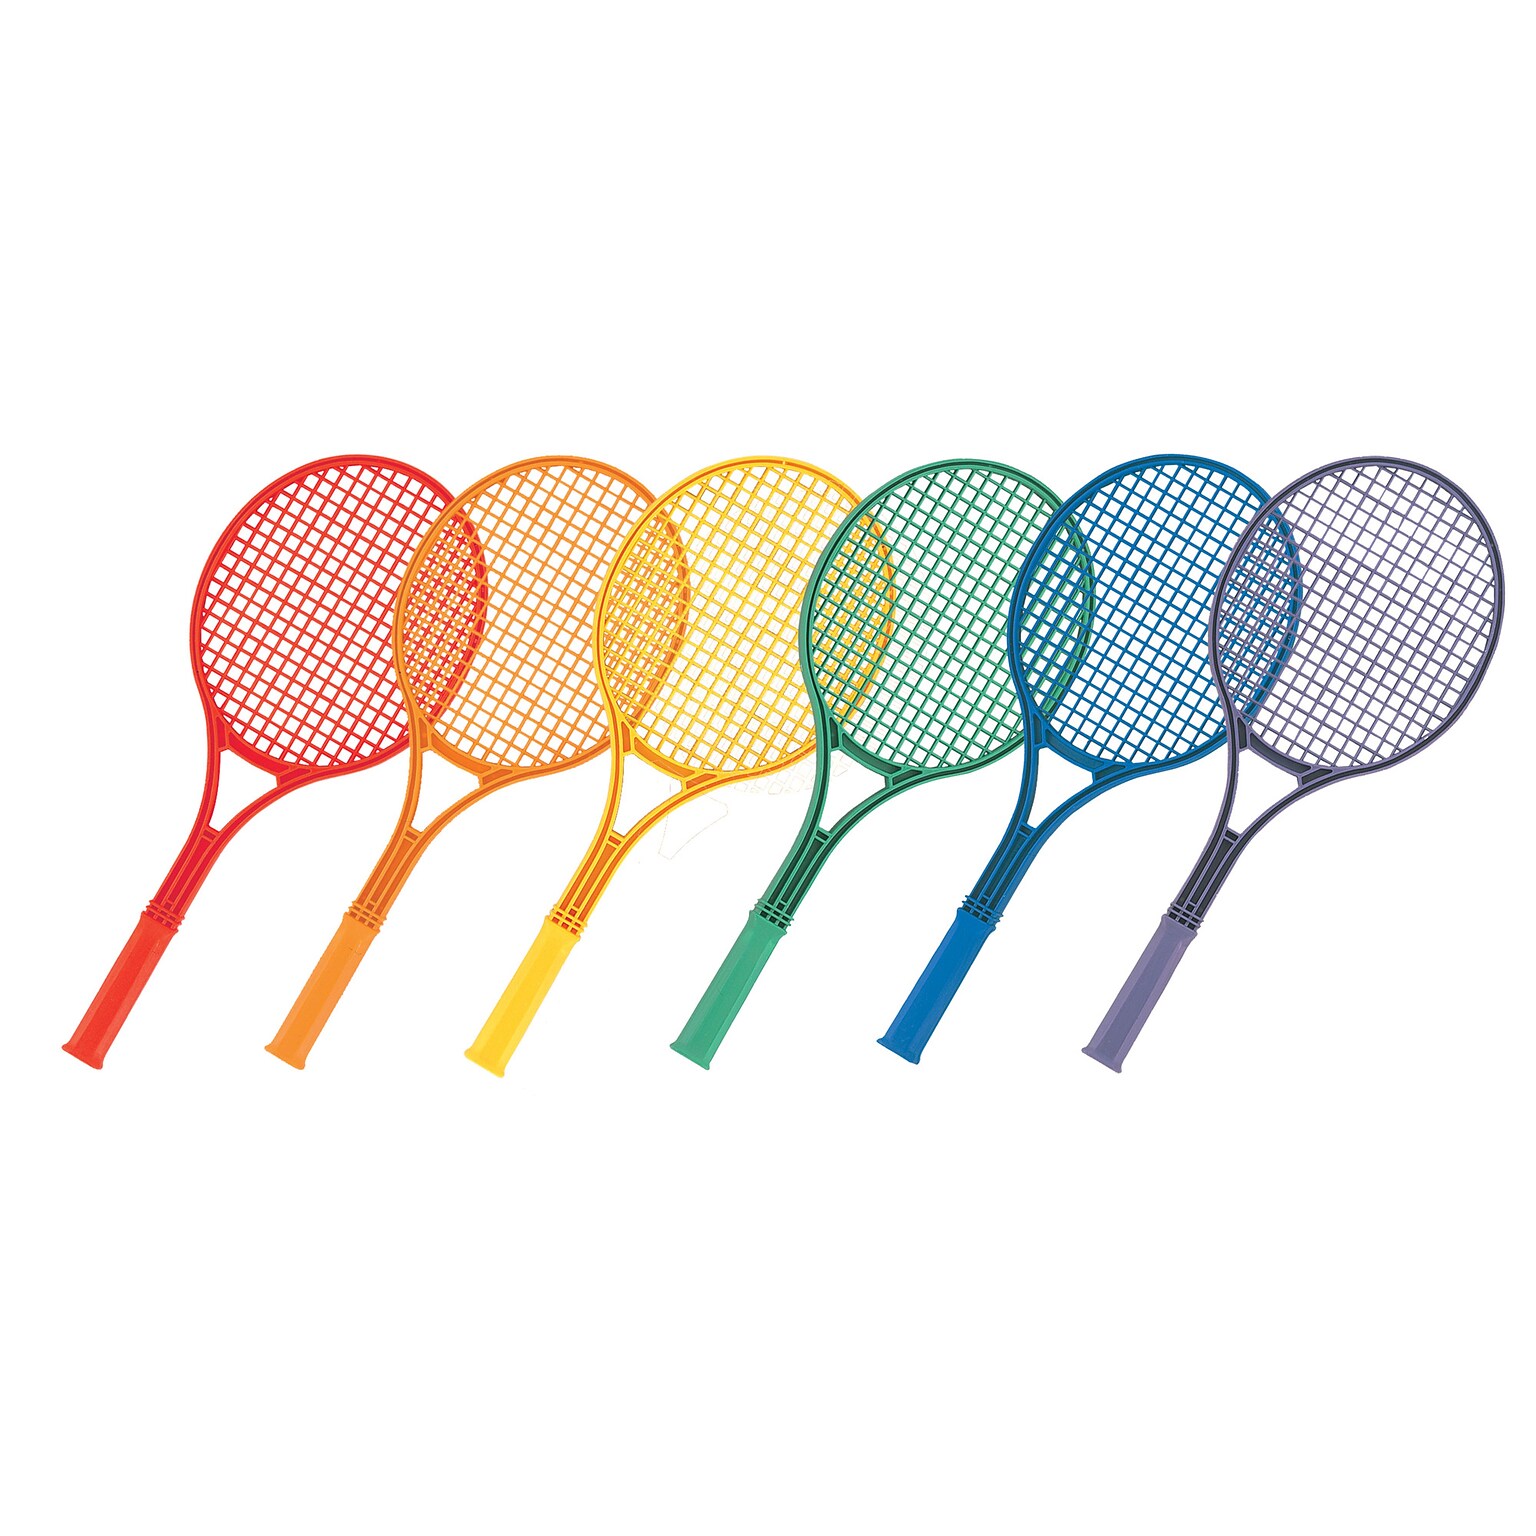 Champion Sports Plastic Tennis Racket Set, 21, Assorted Colors (CHSJTRSET)